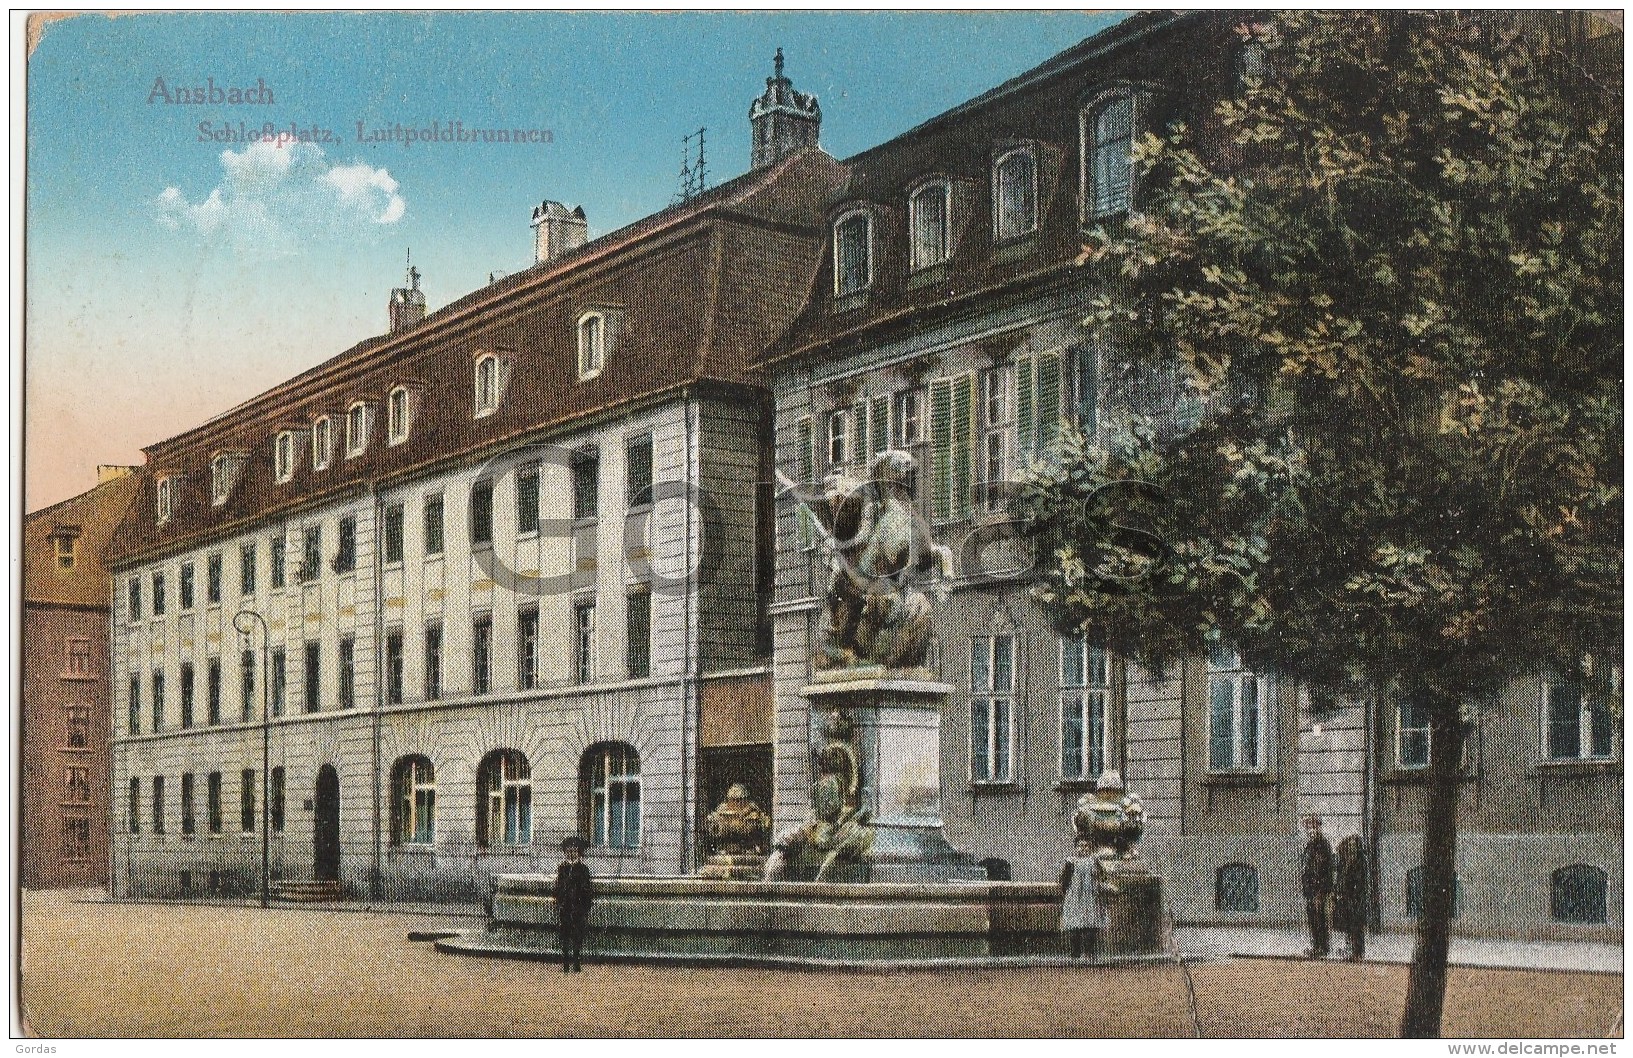 Germany - Ansbach - Schlossplatz - Luitpoldbrunnen - Ansbach